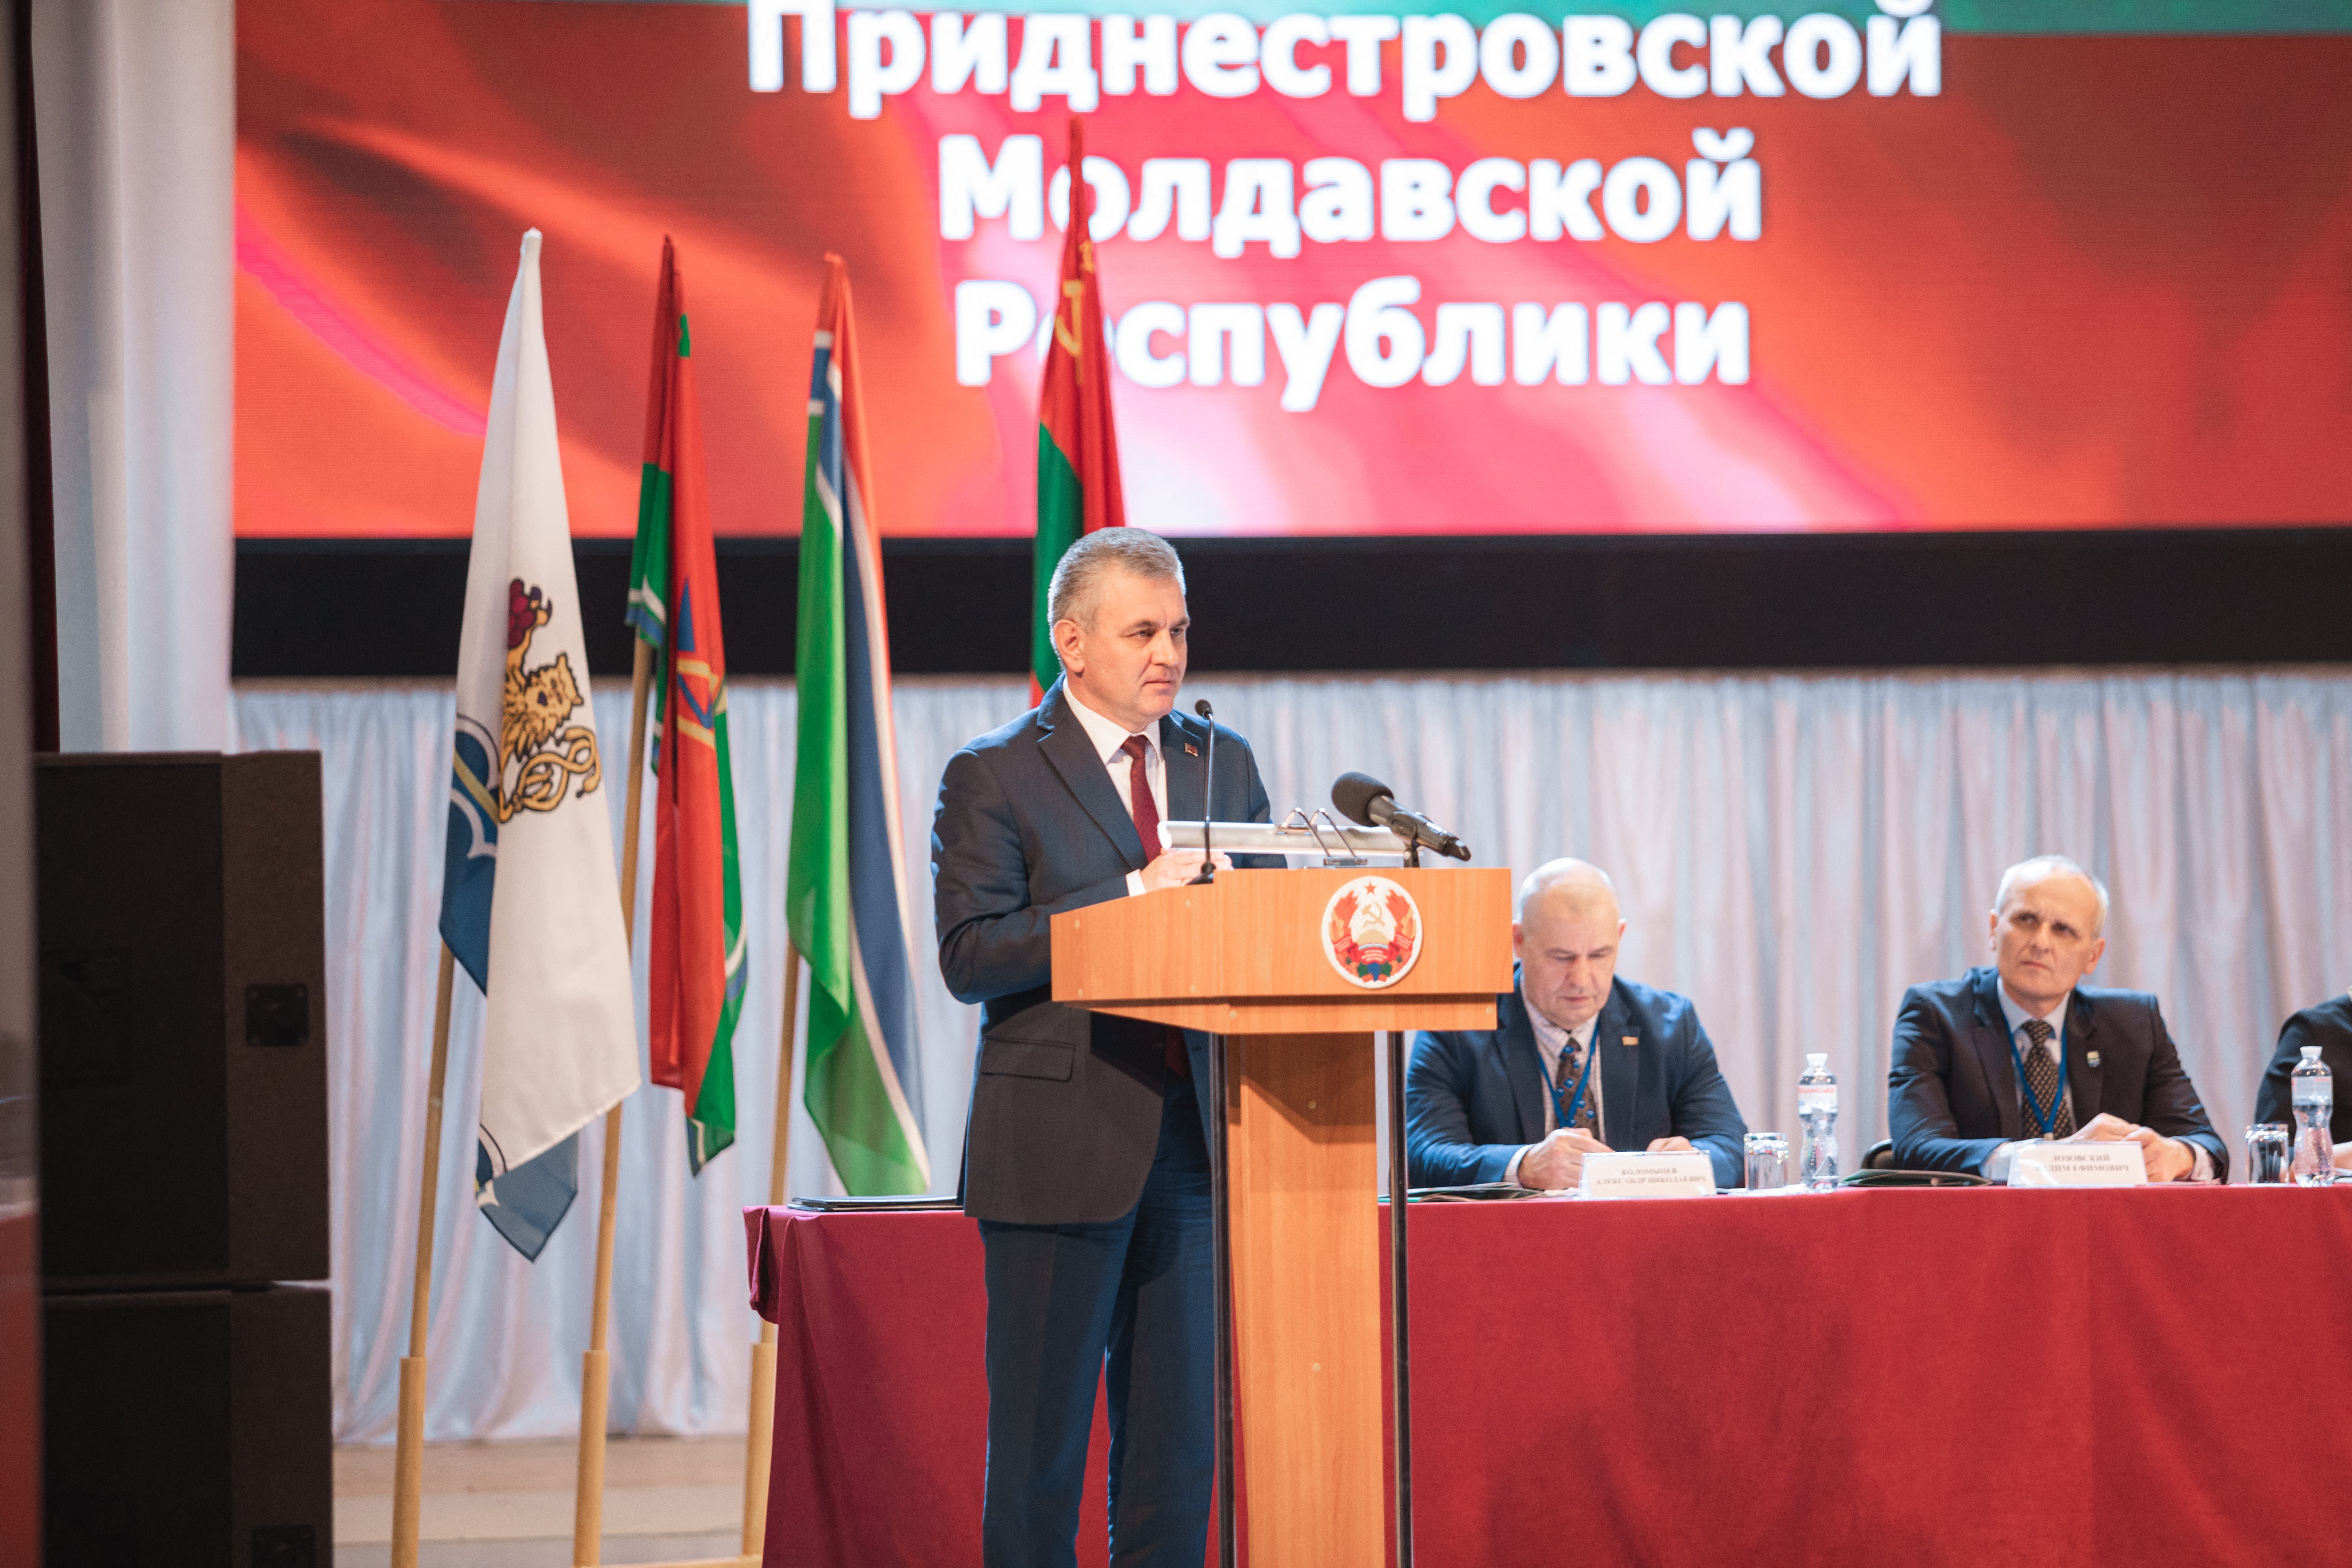 Vadim Krasnoselsky, the head of Transnistria - Moldova’s pro-Russian breakaway region, gives a speech during a congress of Transnistrian deputies in Tiraspol